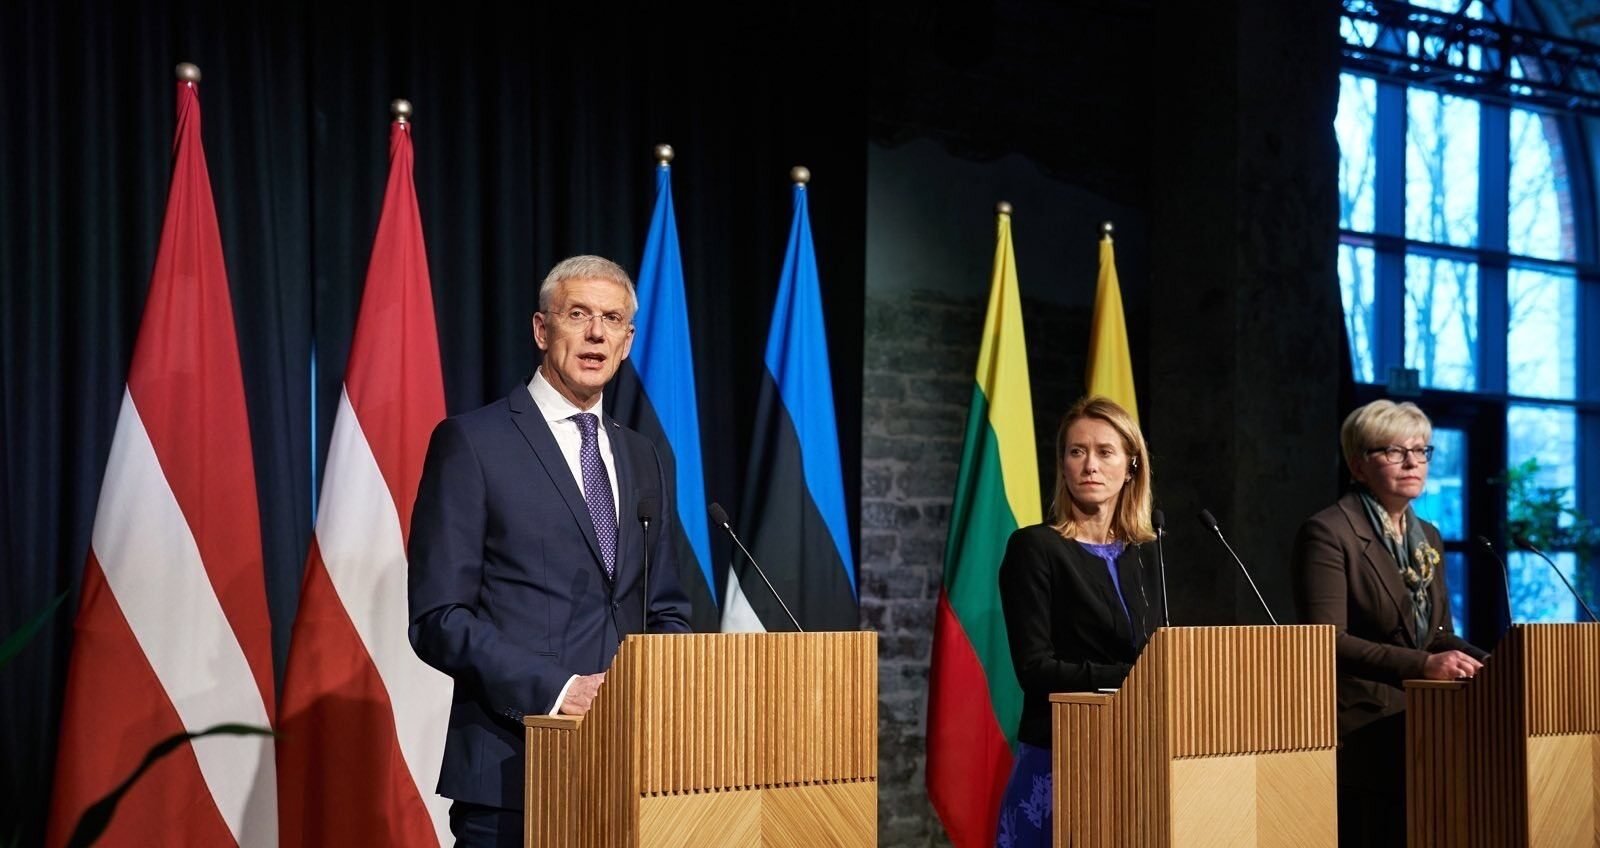 Prime ministers of the three Baltic states - Latvia, Lithuania and Estonia